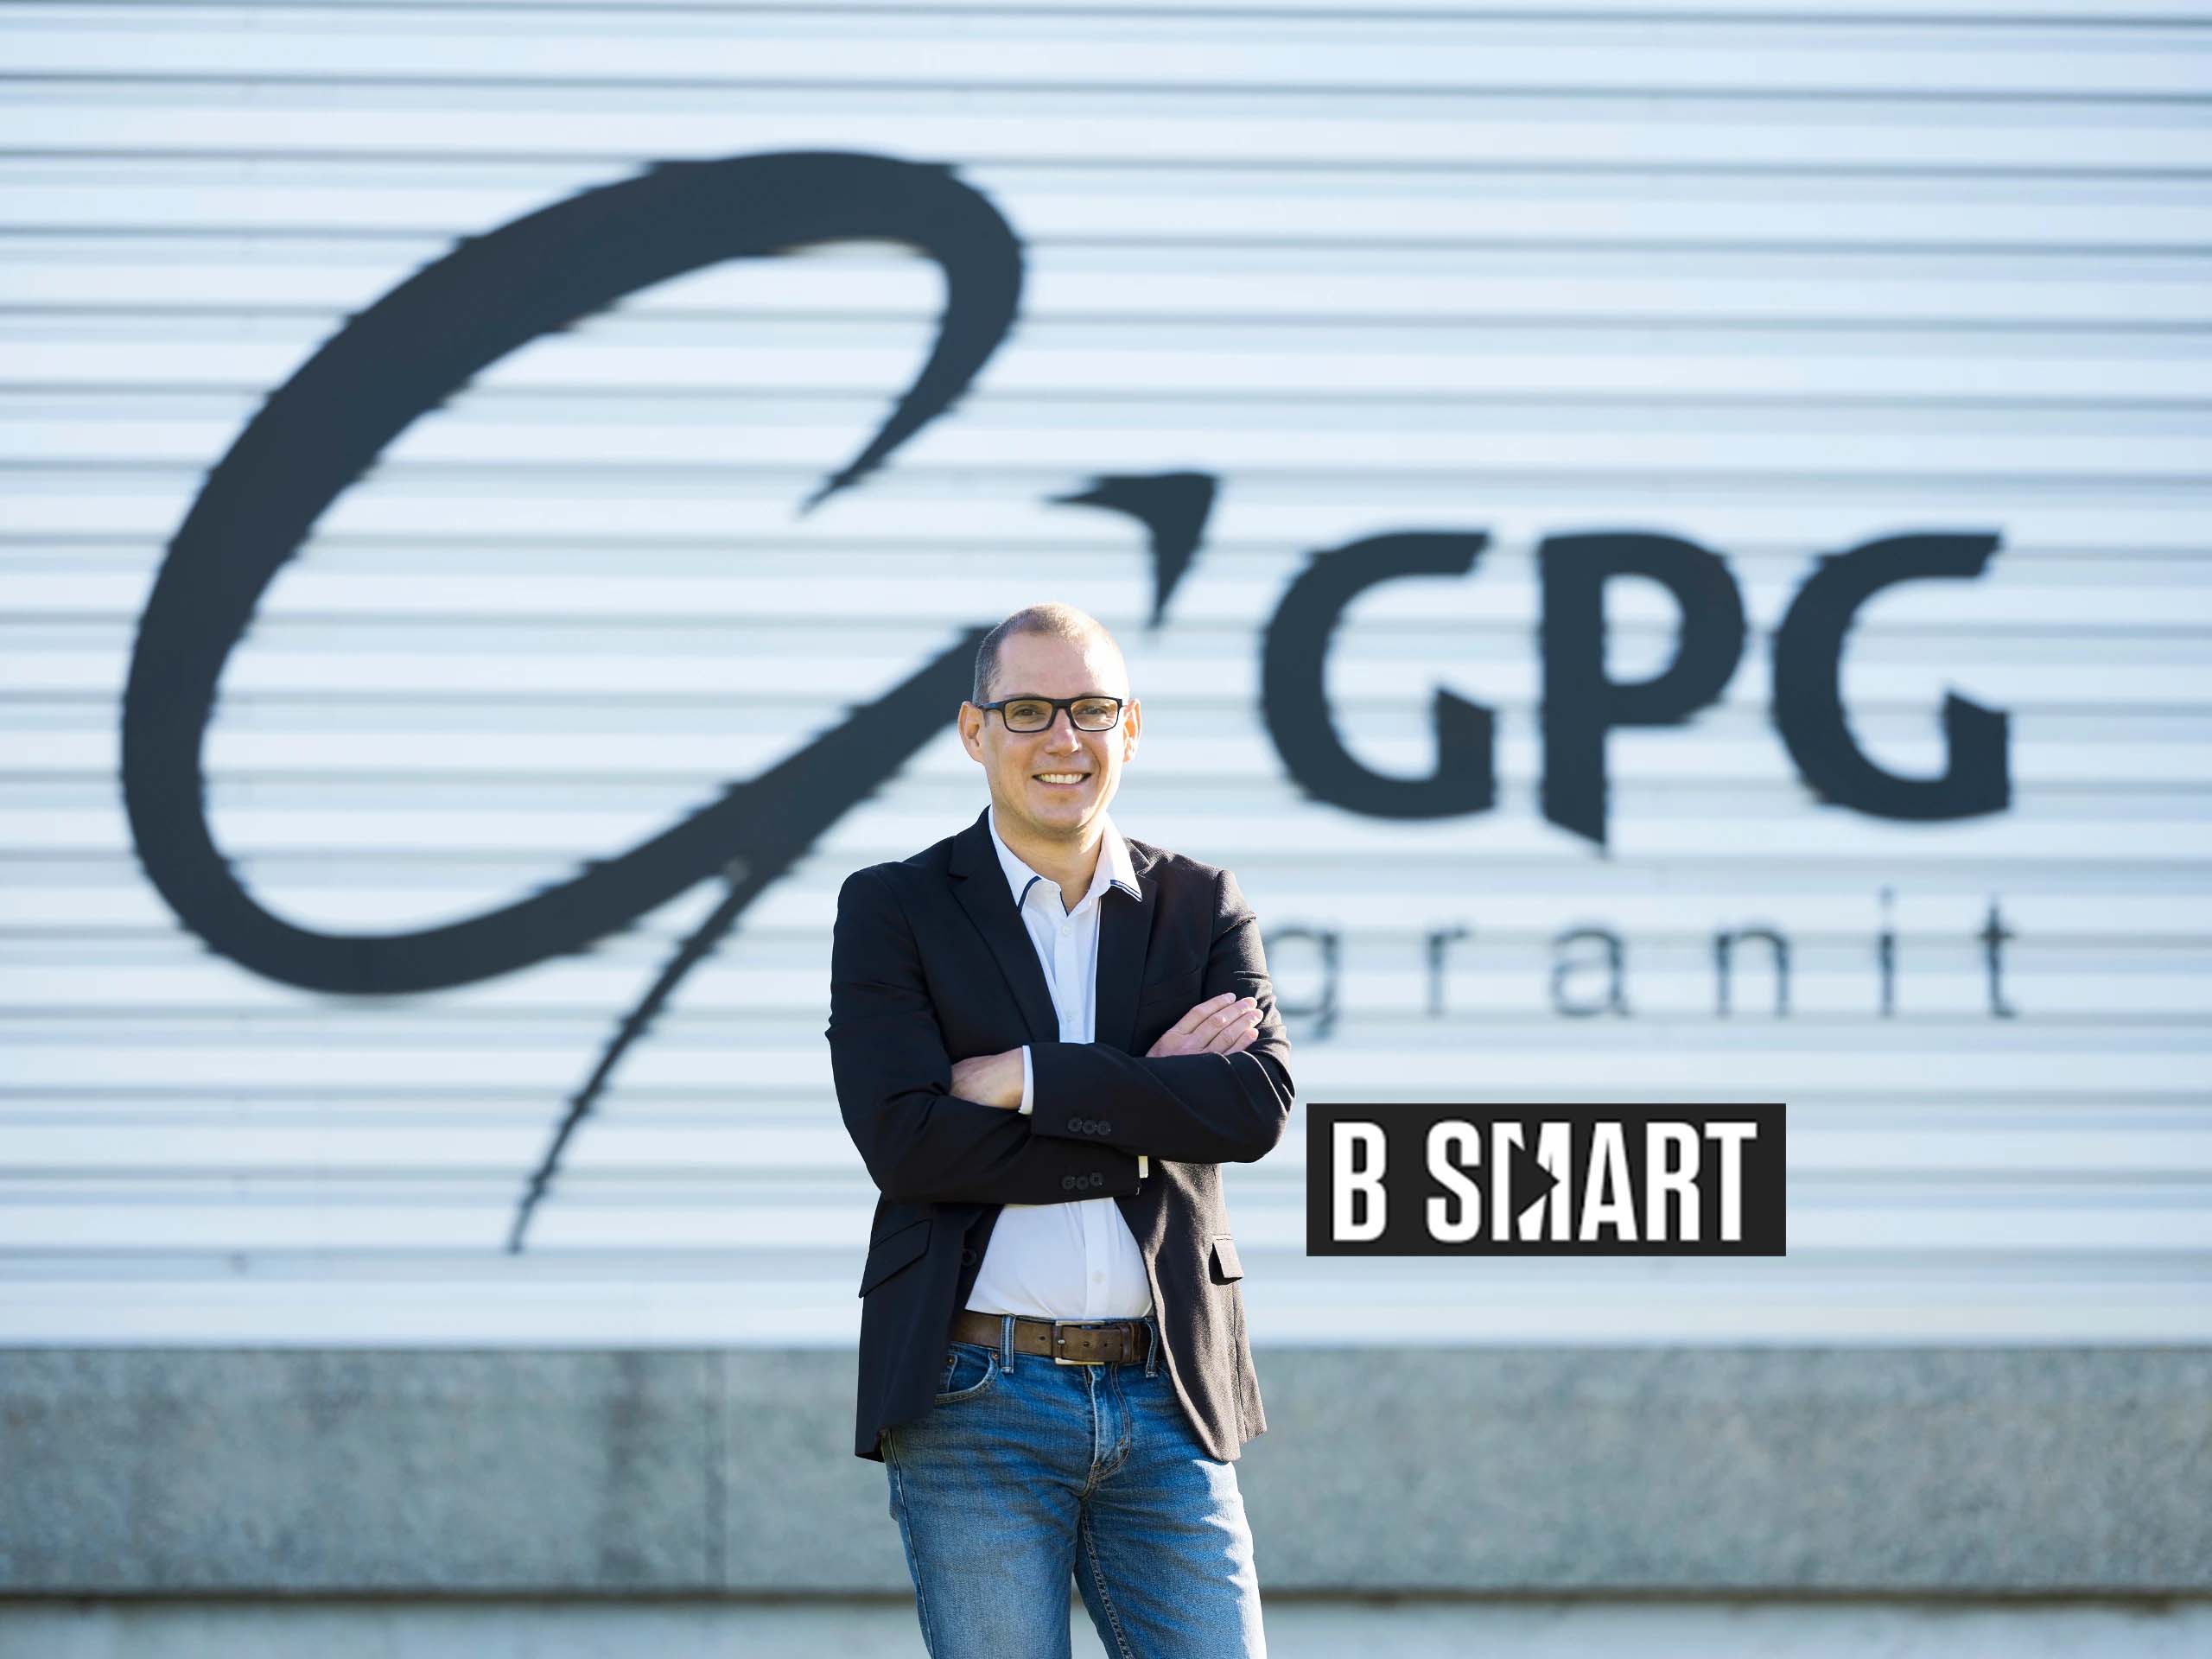 Interview d’Alexis JUBERT, PDG de GPG Granit, par BSMART